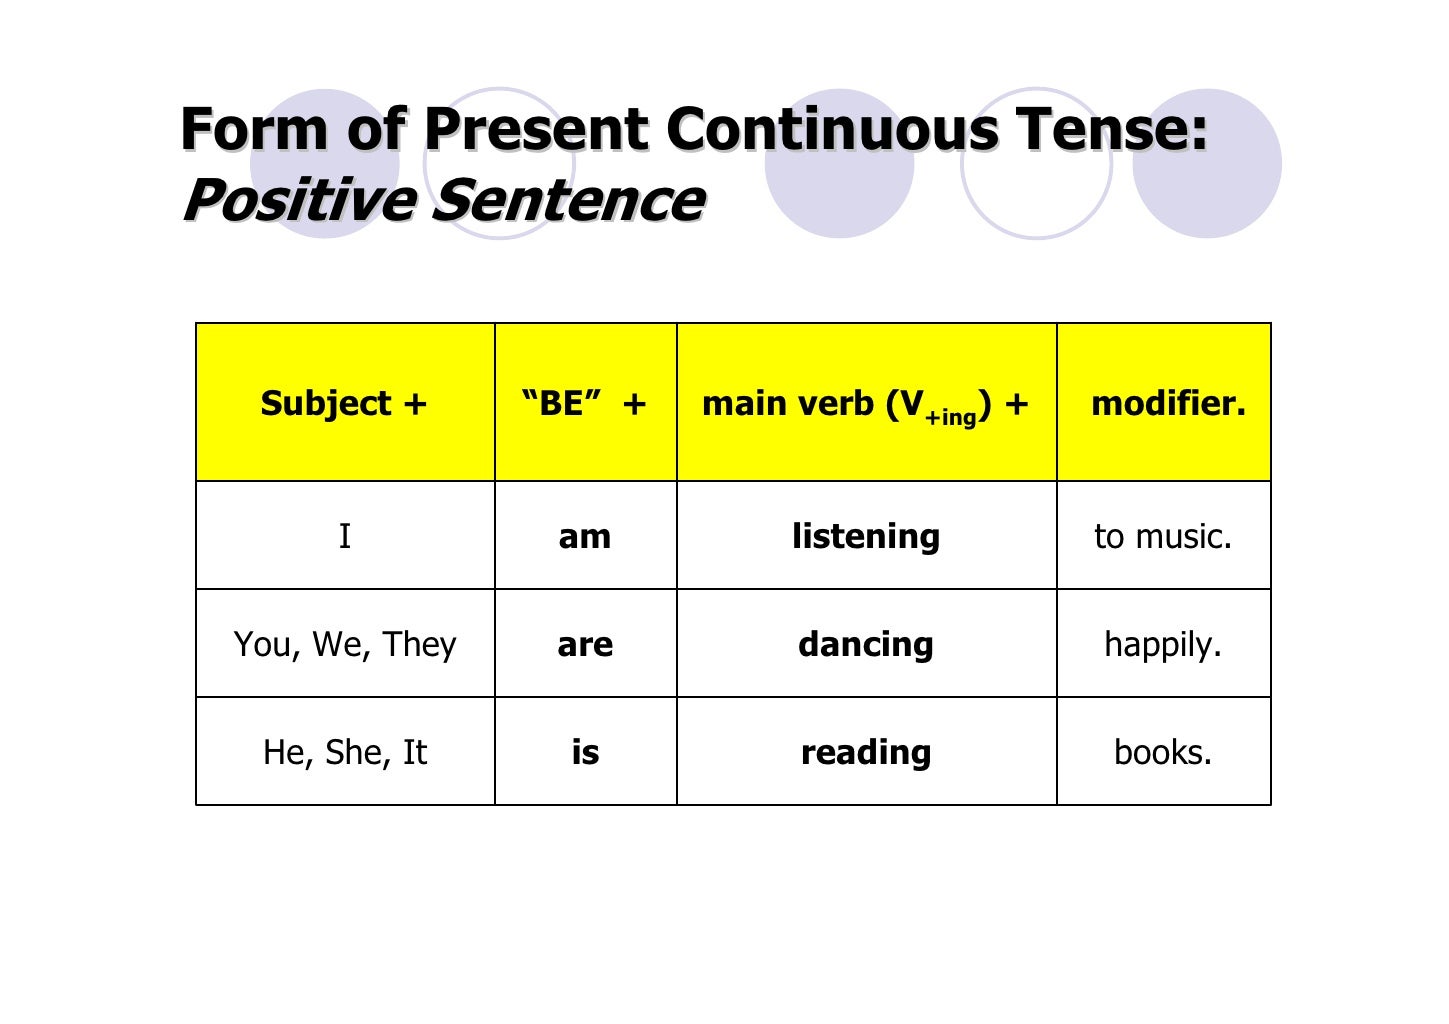 Глагол sit в present continuous